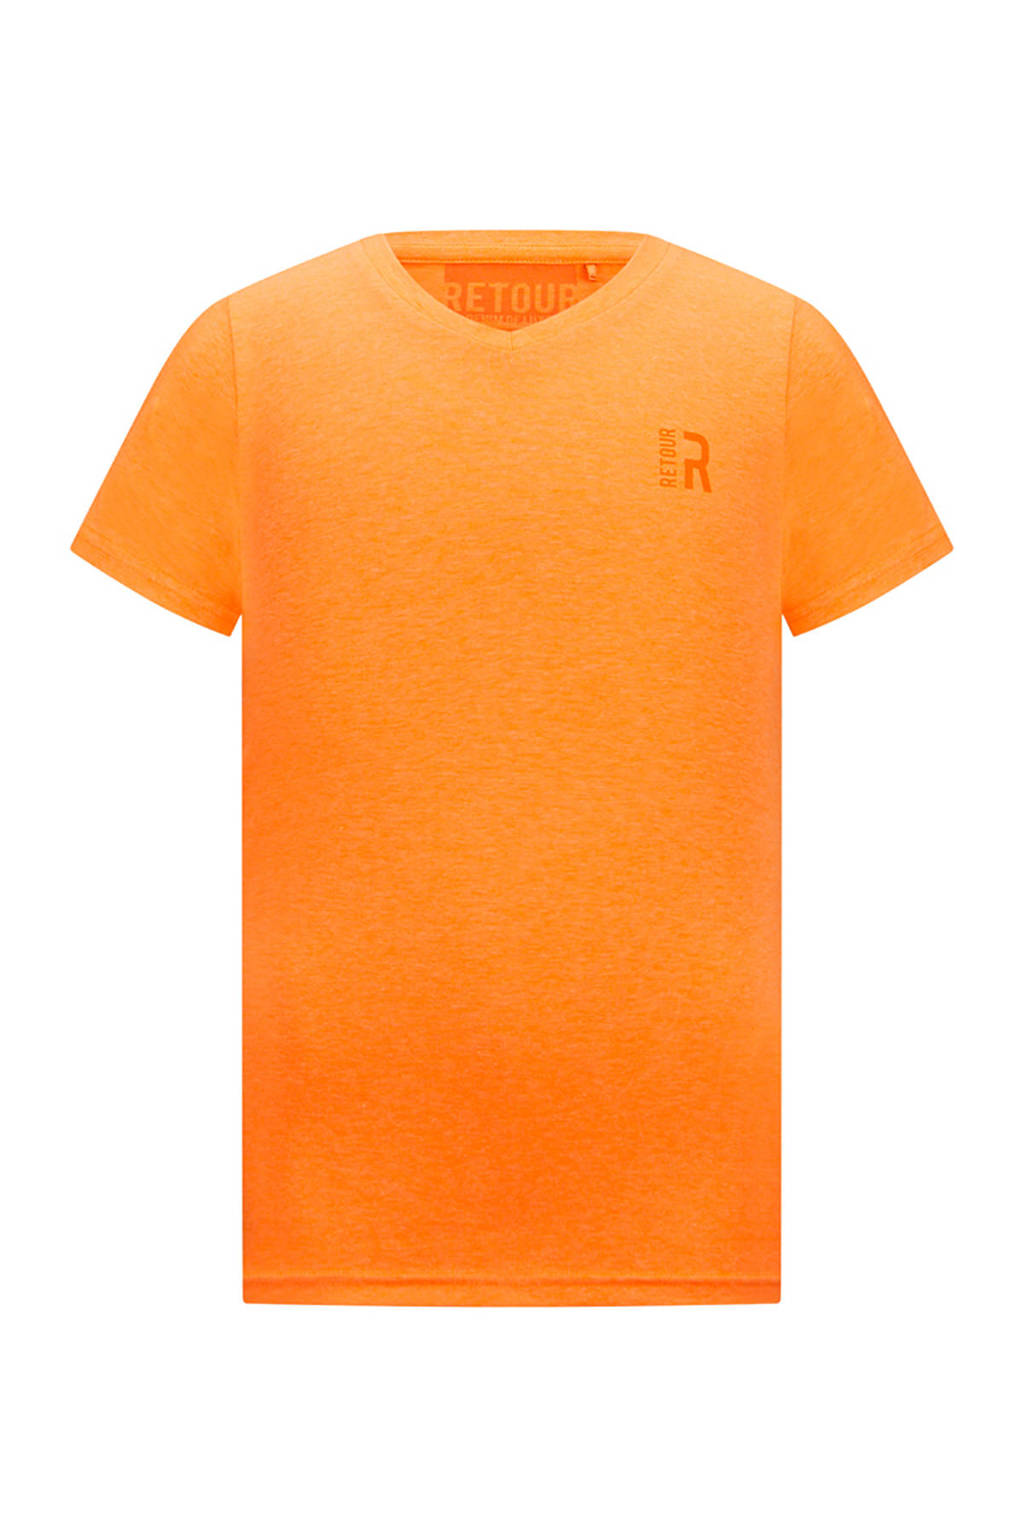 Voorkomen Bewonderenswaardig halen Retour Denim basic T-shirt Sean neon oranje | wehkamp